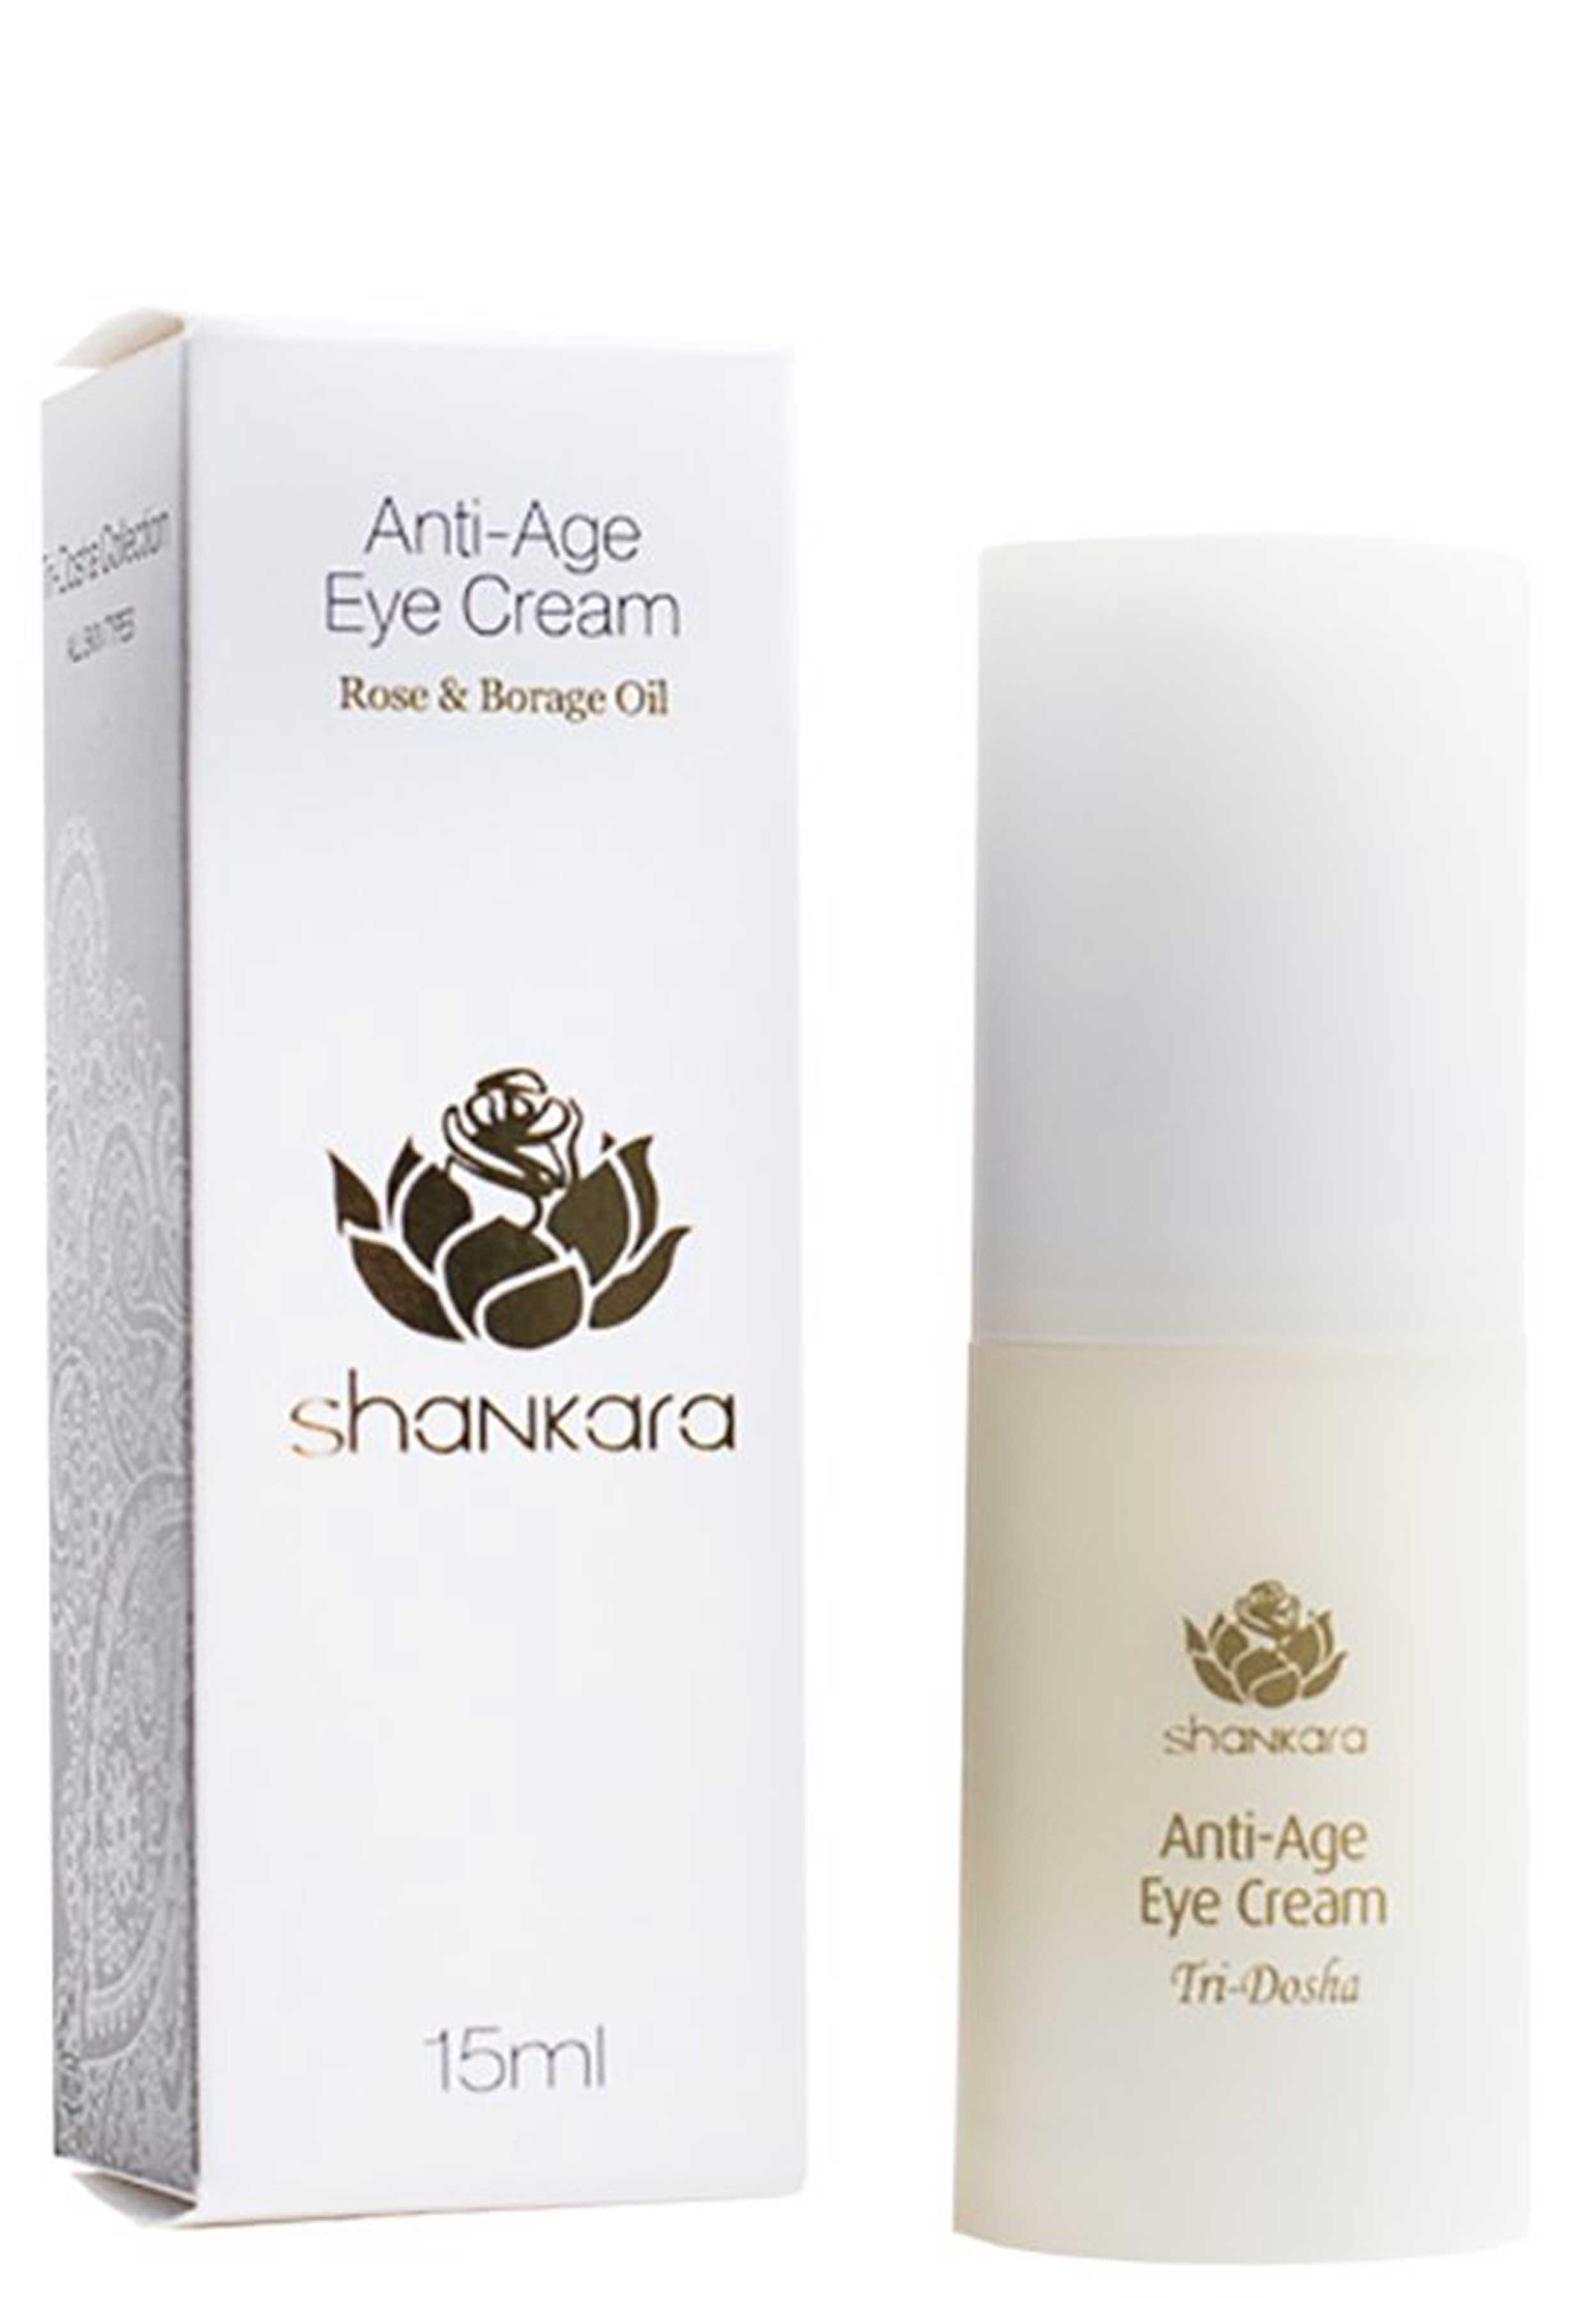 Shankara, Inc. Anti-Age Eye Cream